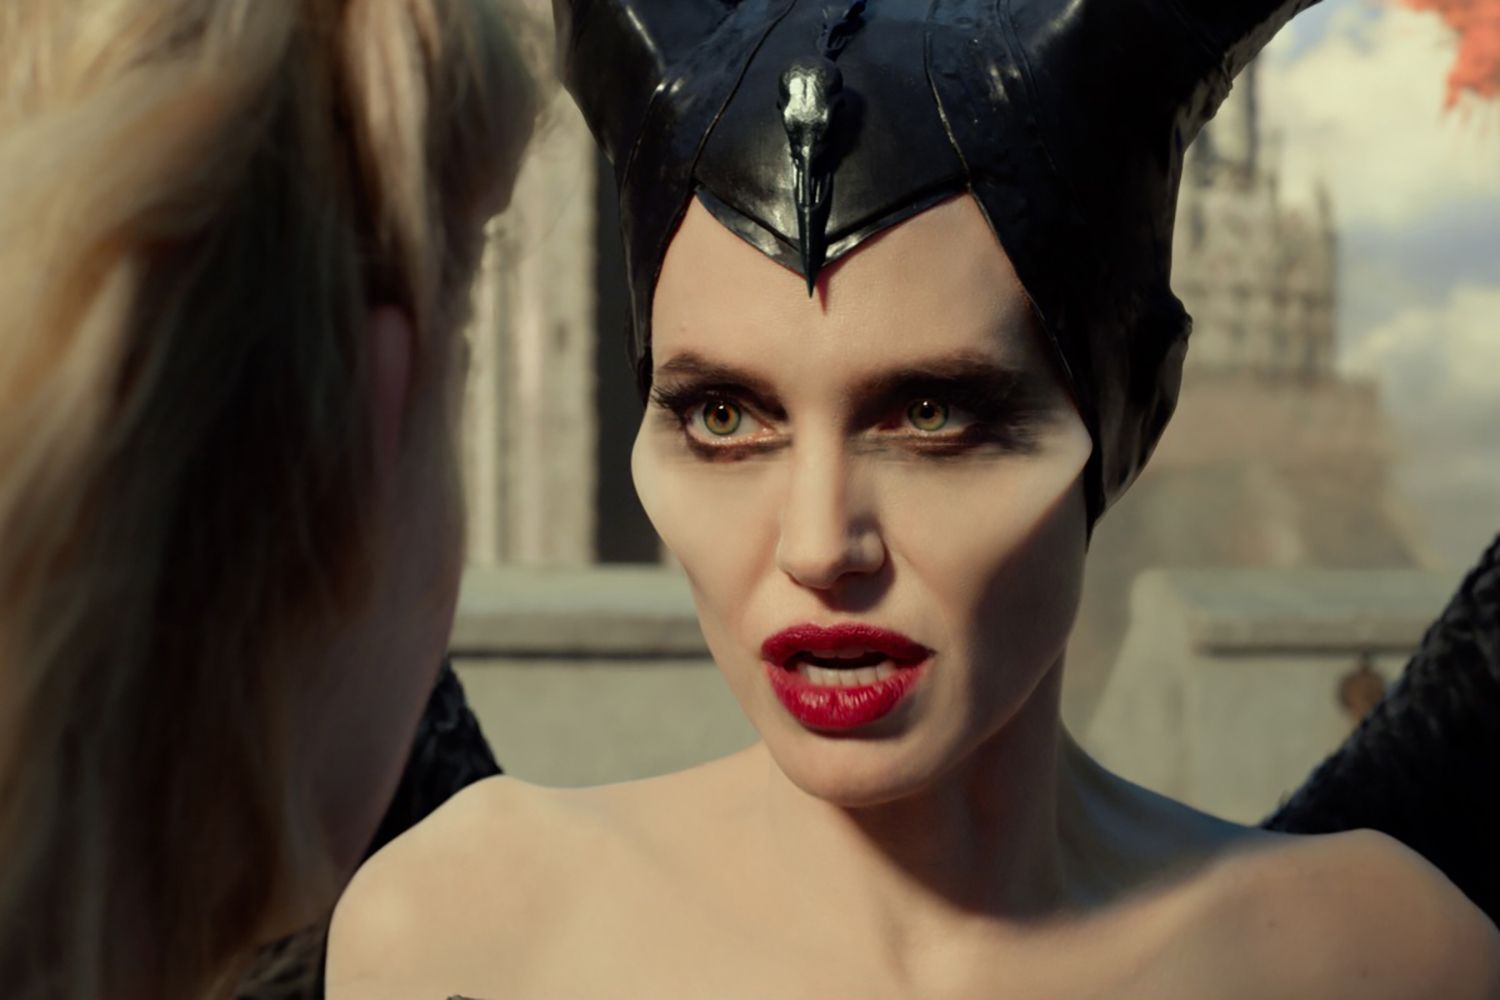 Watching Angelina Jolie morph into Disney's Maleficent is mesmerising